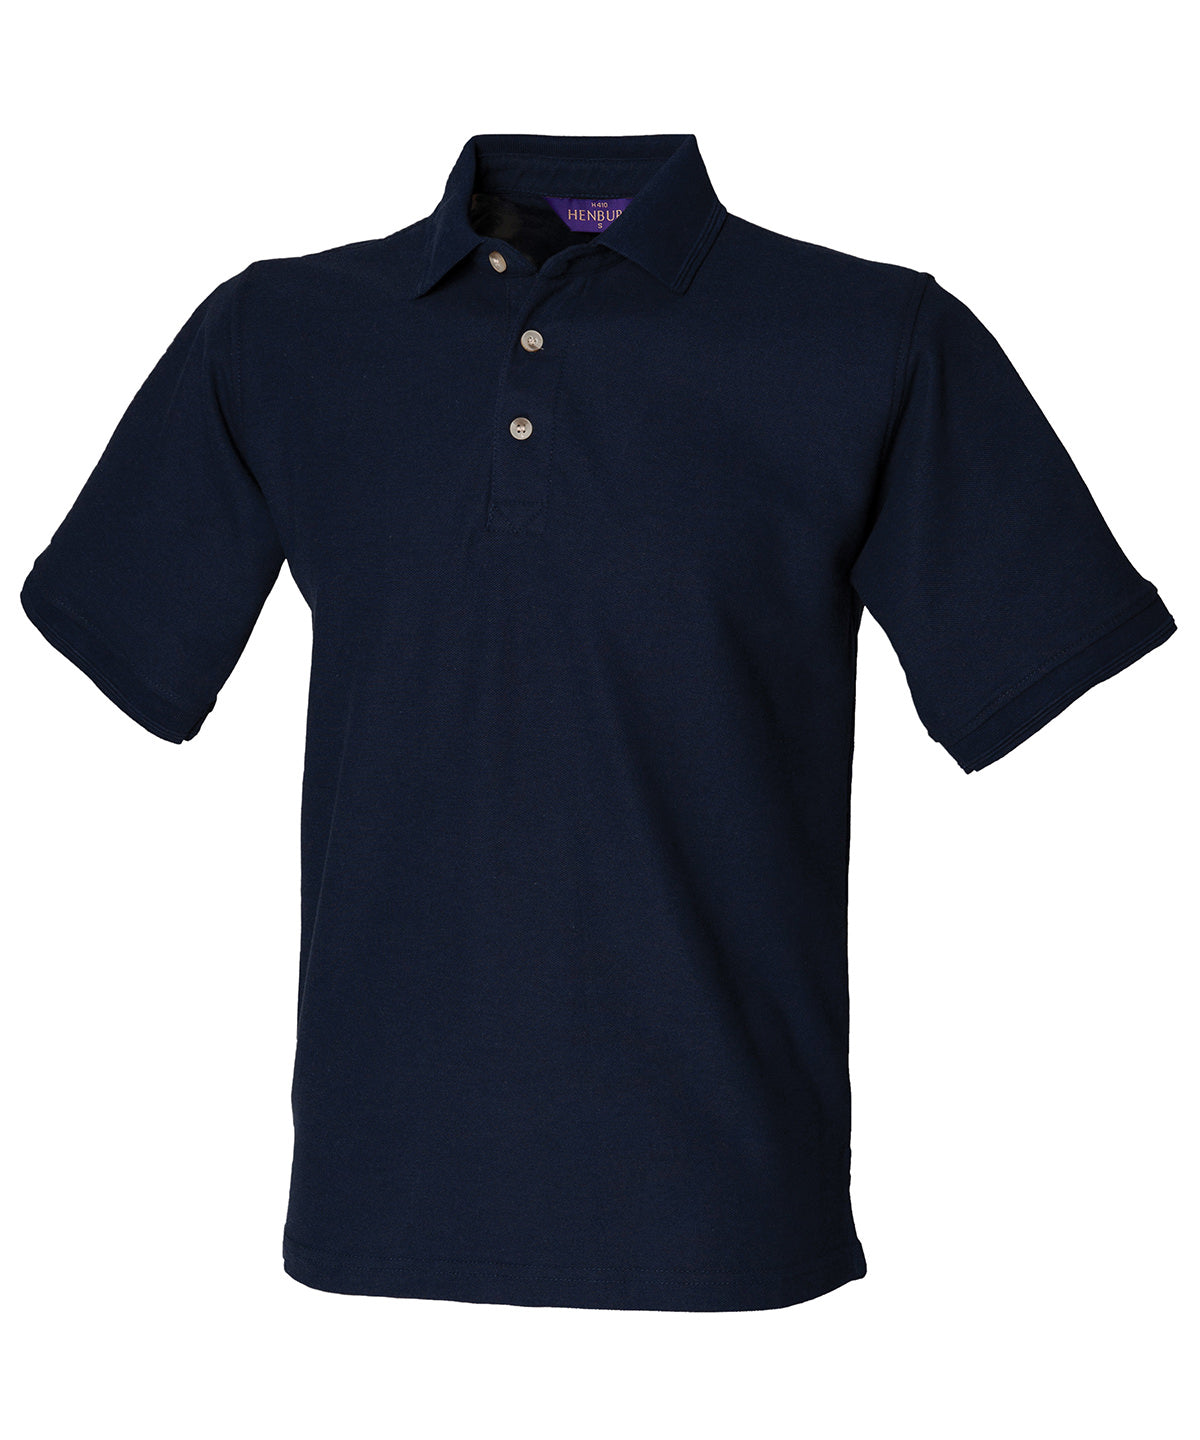 Personalised Polo Shirts - Black Henbury Ultimate 65/35 polo shirt